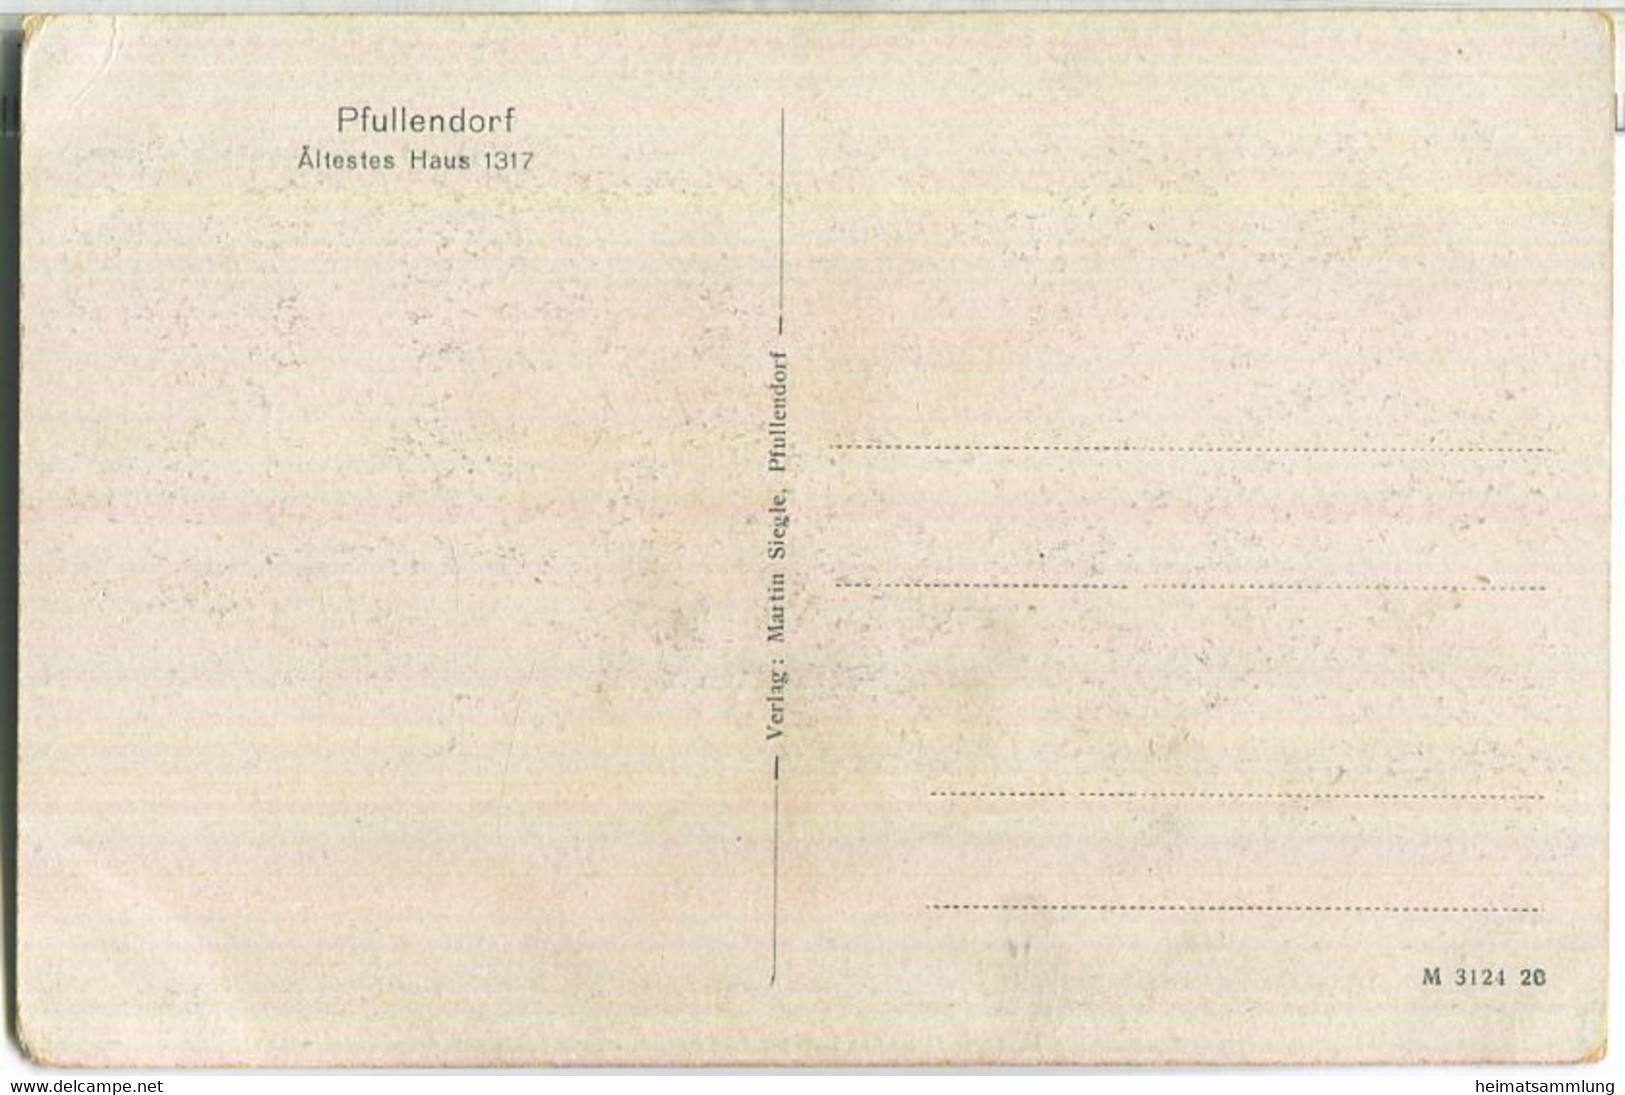 Pfullendorf - Ältestes Haus 1317 - AK 20er Jahre - Verlag Martin Siegle Pfullendorf - Pfullendorf